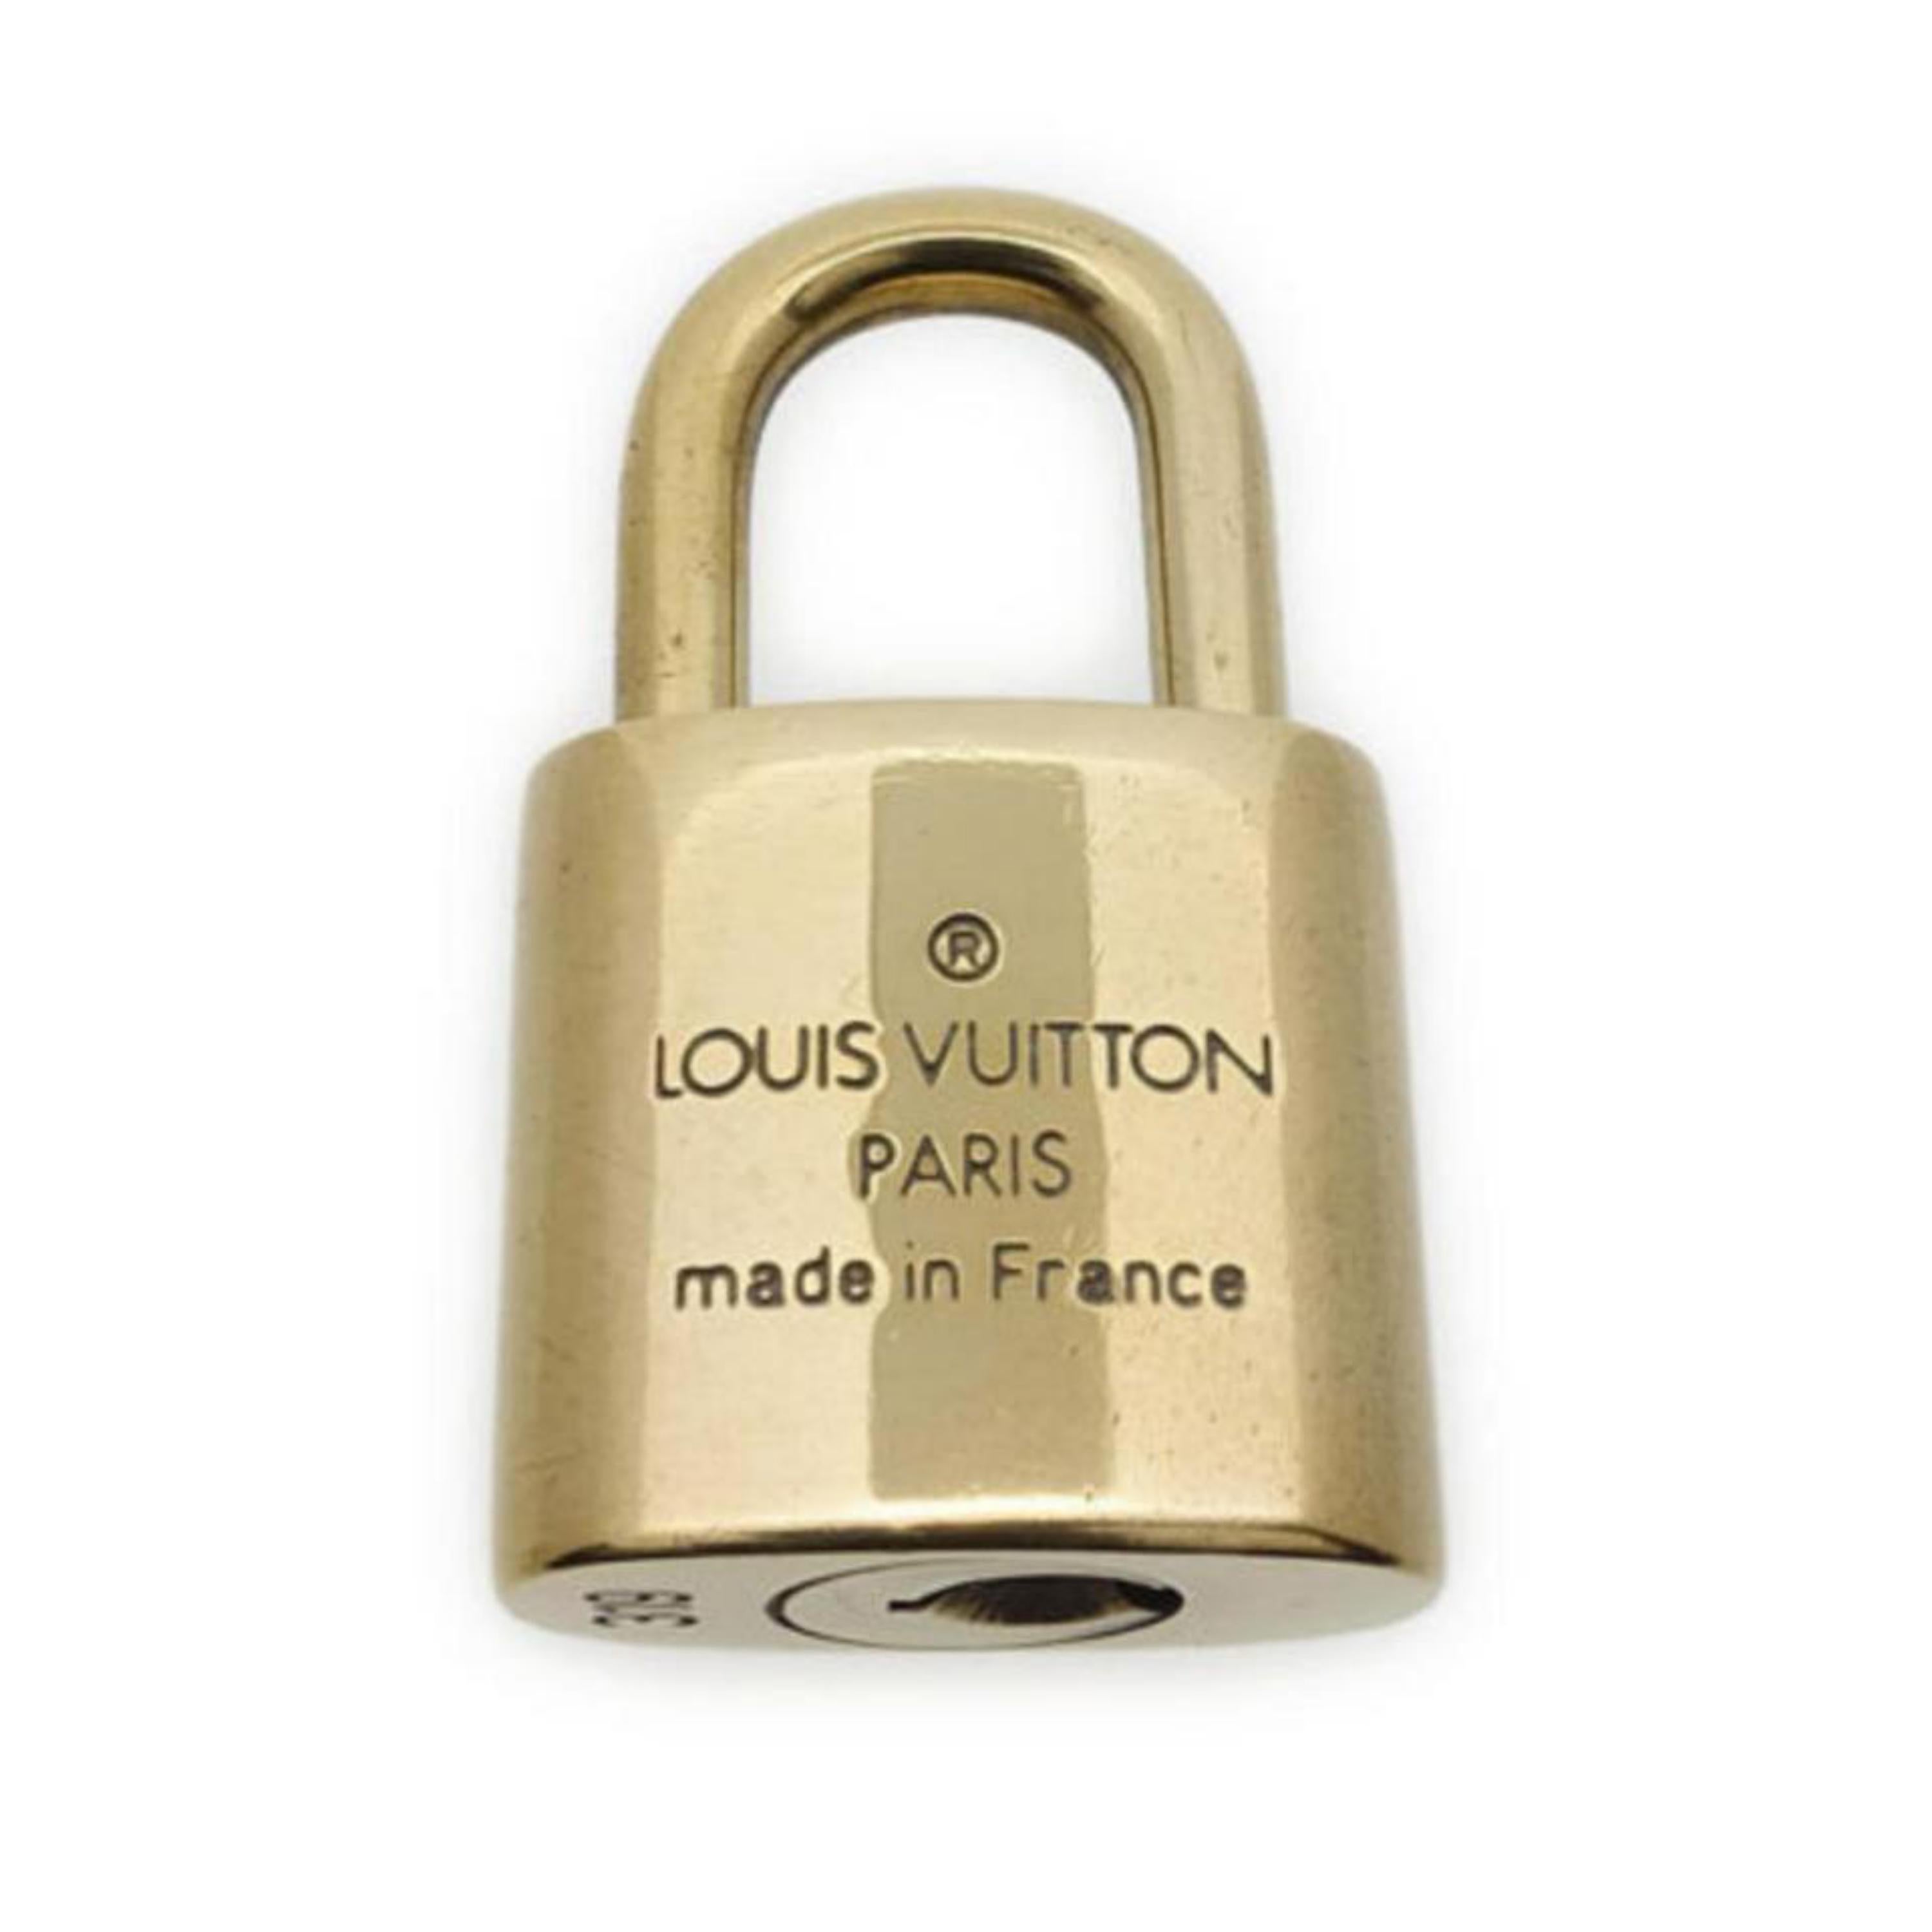 Louis Vuitton Gold Single Key Lock Pad Lock and Key 867731 1